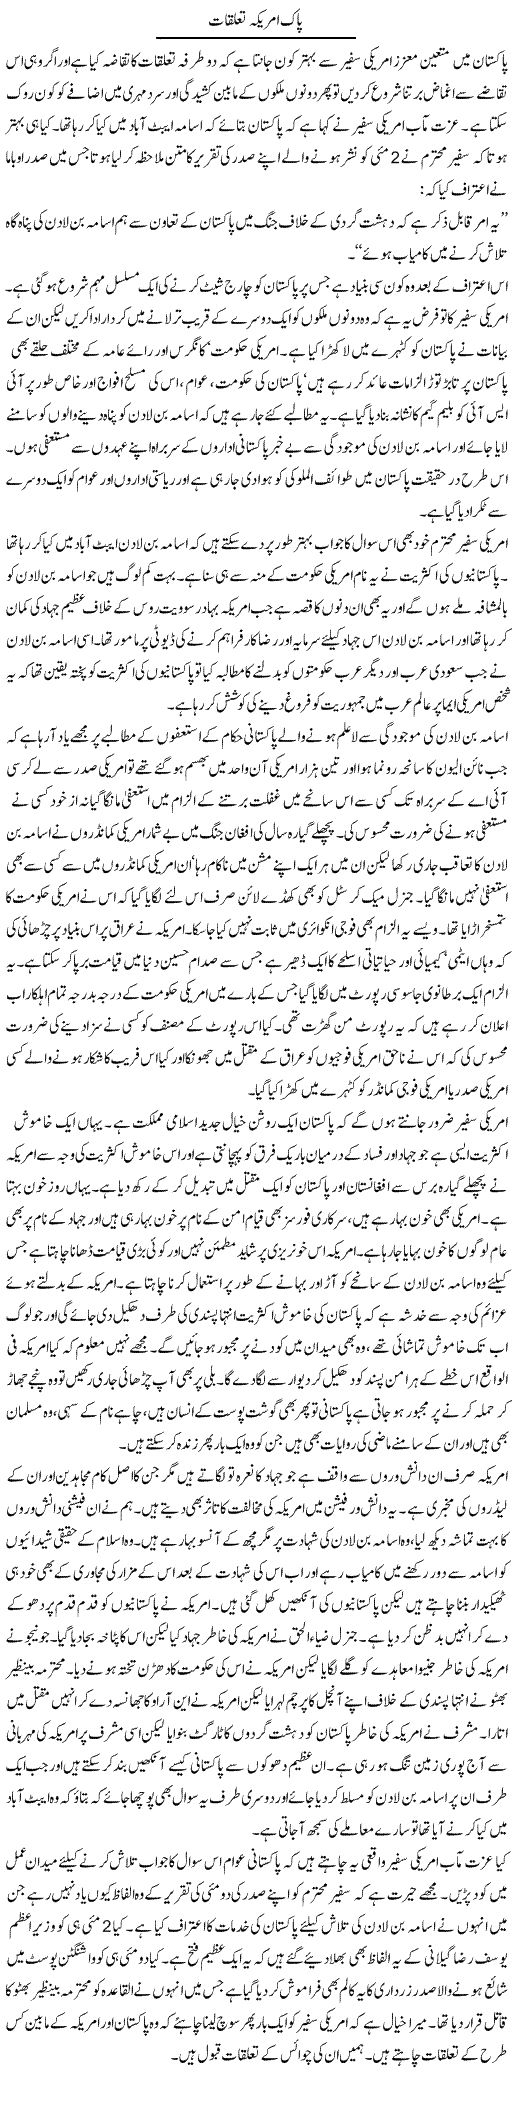 Pak America Relations Express Column Asadullah Ghalib 12 May 2011